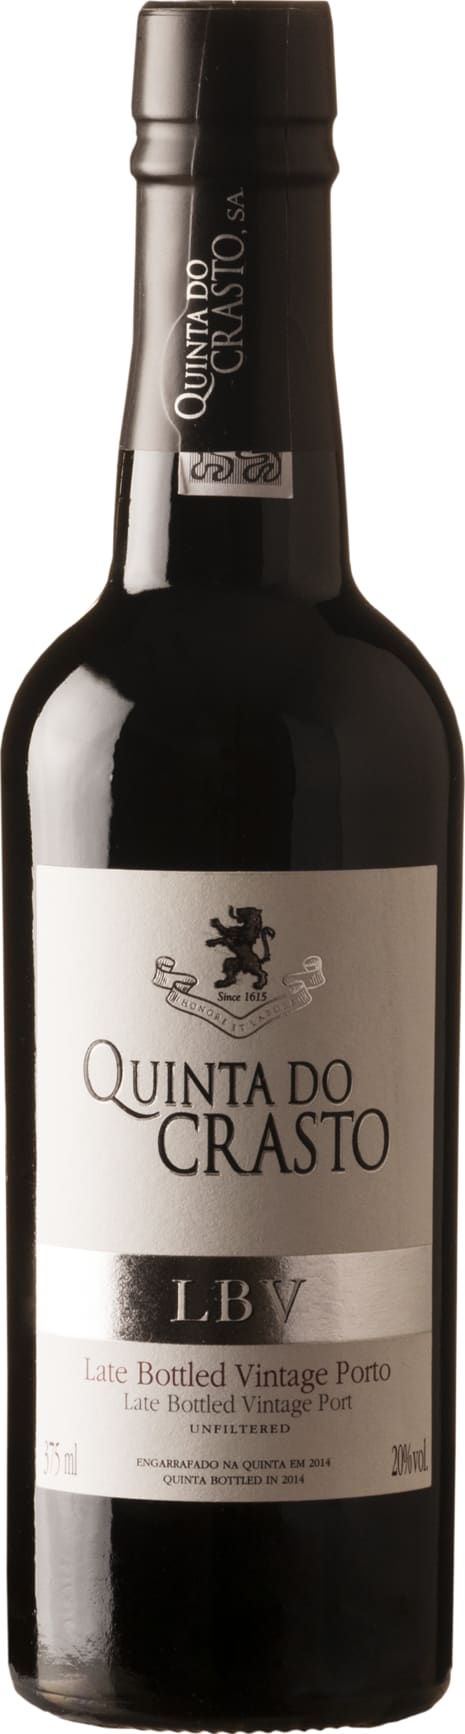 Quinta Do Crasto LBV Port 2017 75cl - Buy Quinta Do Crasto Wines from GREAT WINES DIRECT wine shop